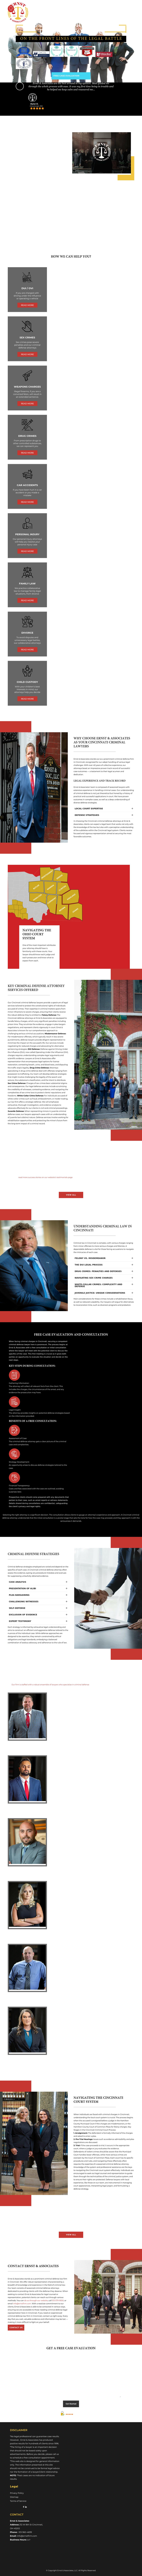 Ernst & Associates - Cincinatti OH Lawyers